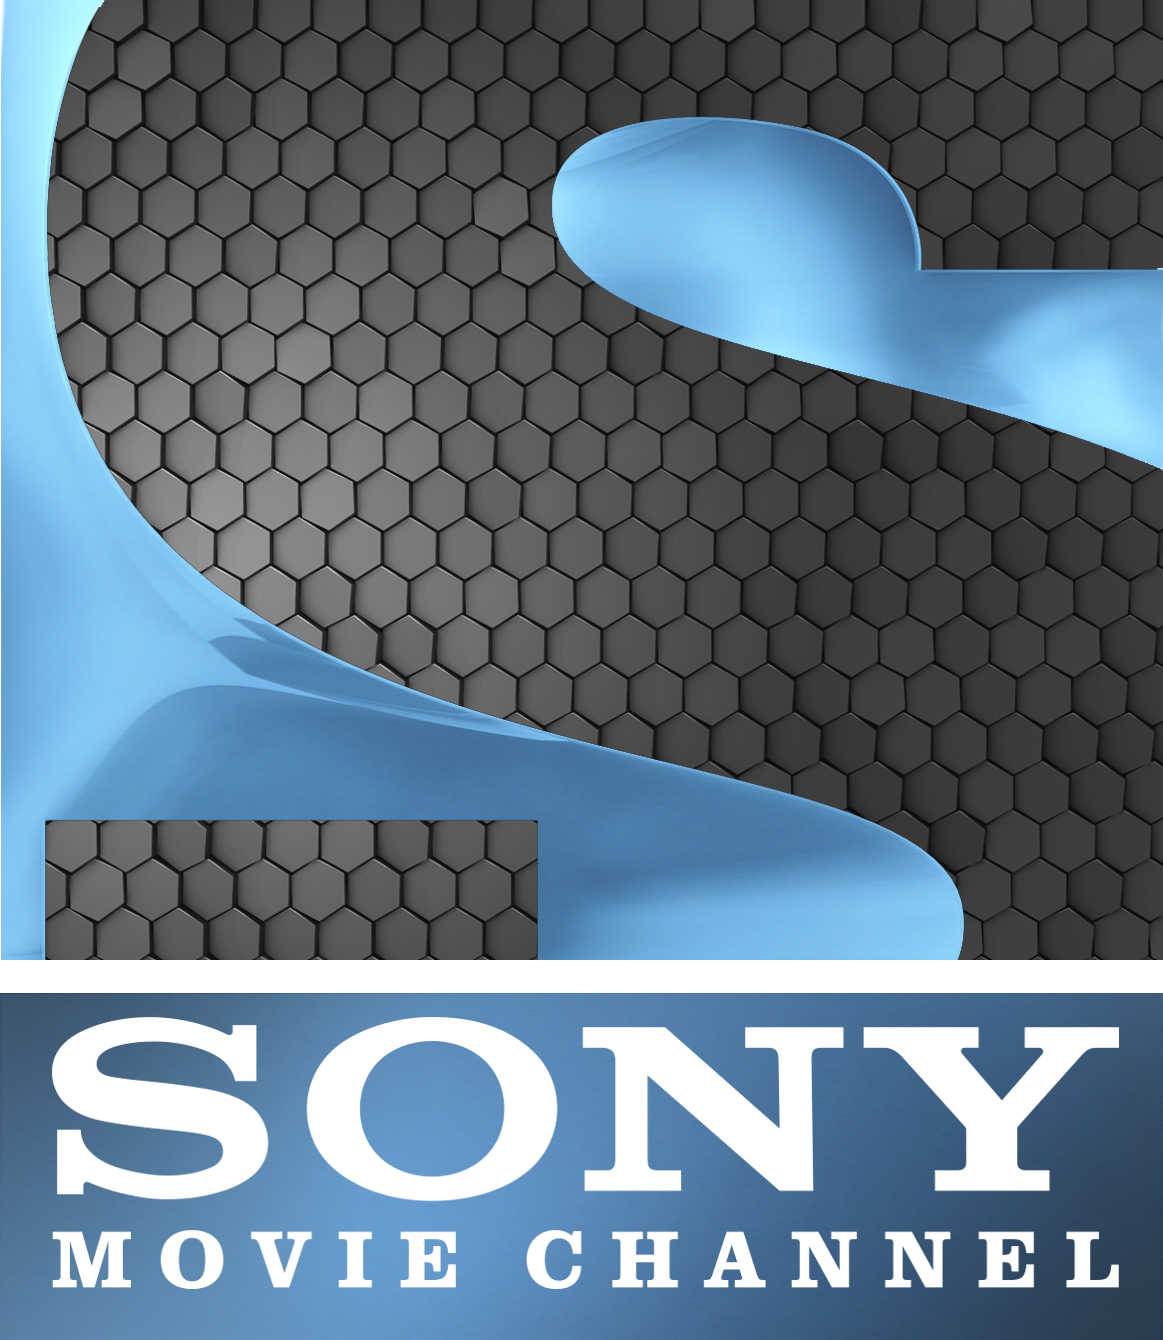 sony-movie-channel-2016-logo_8szj.png